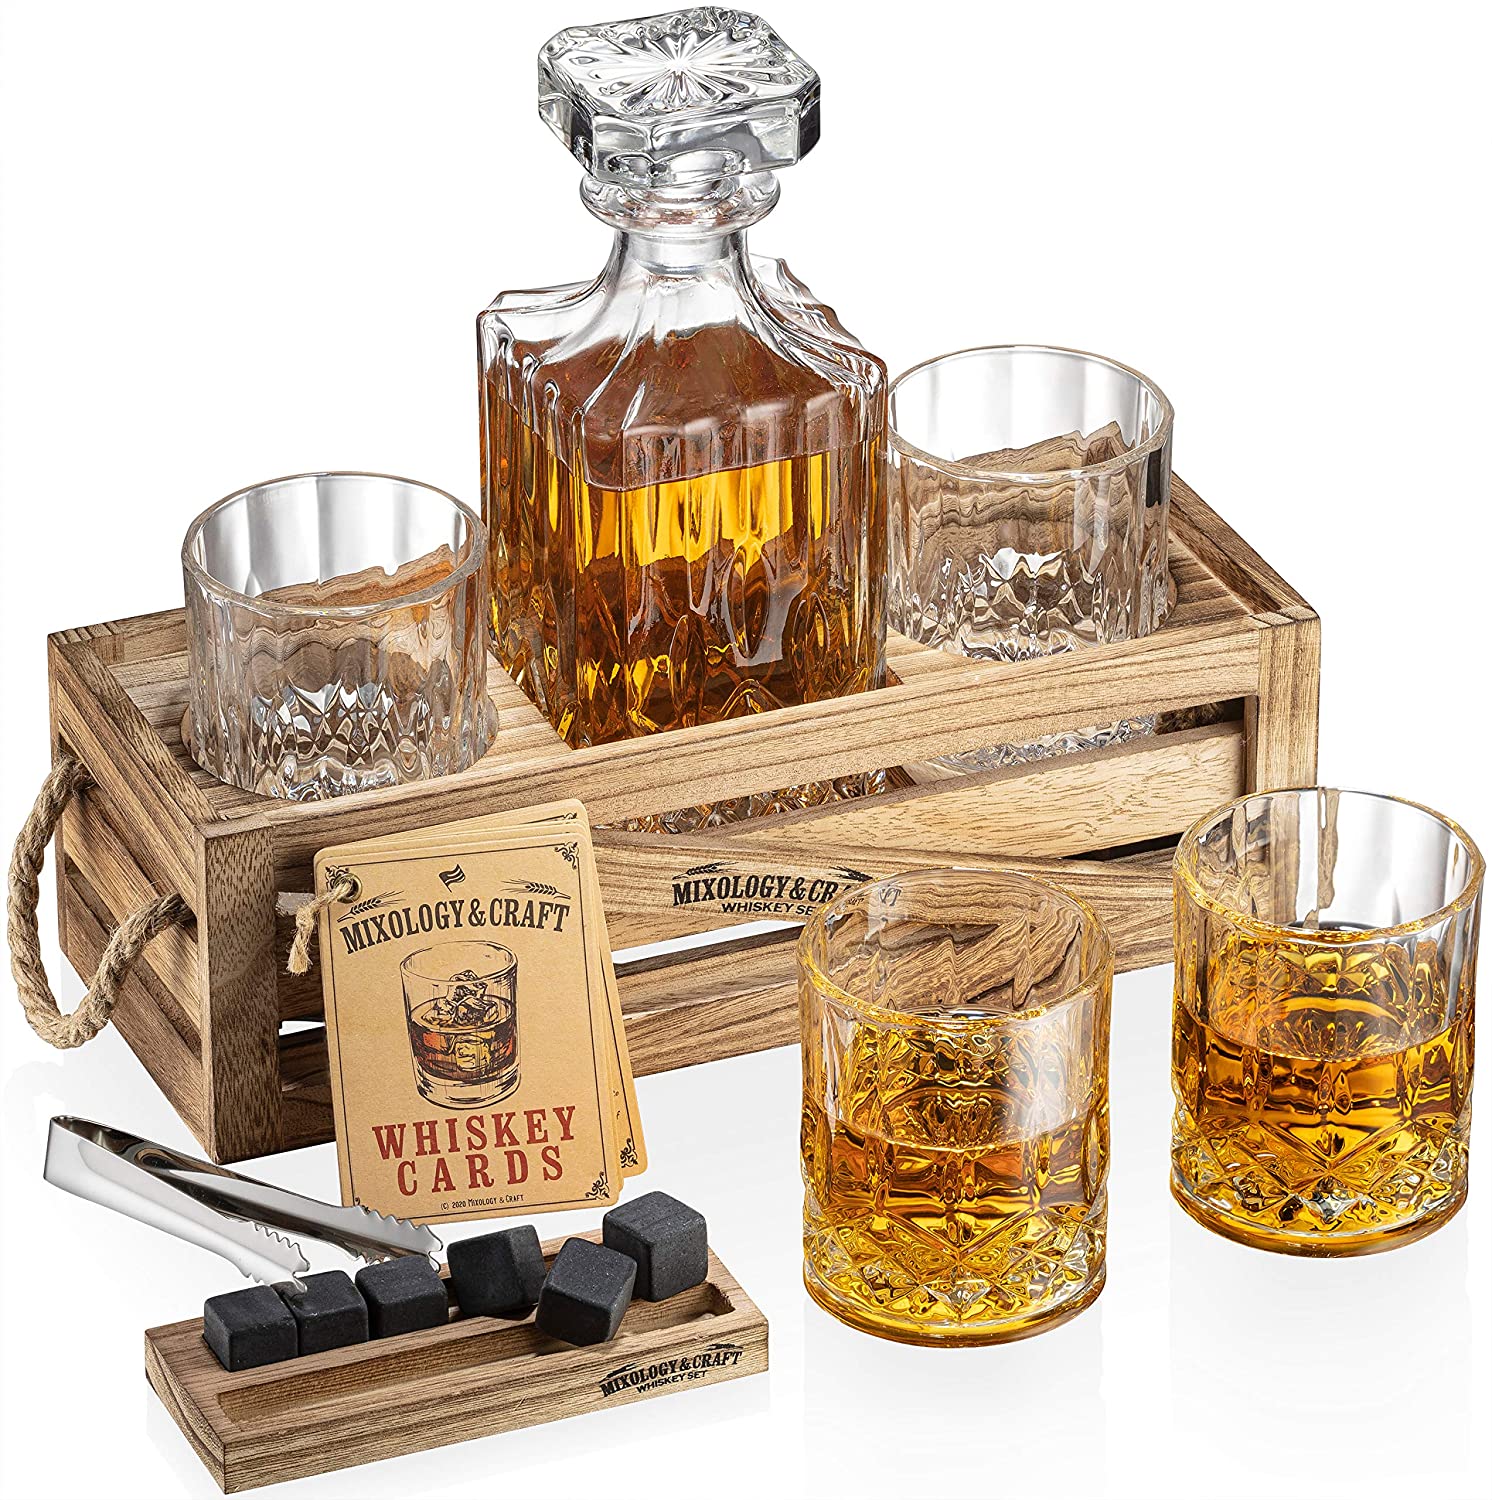 Factory selling Whiskey Glasses - Home Whisky Glass Classy whisky decanter Whisky Stones by wooden holder Gift for Men – Shunstone